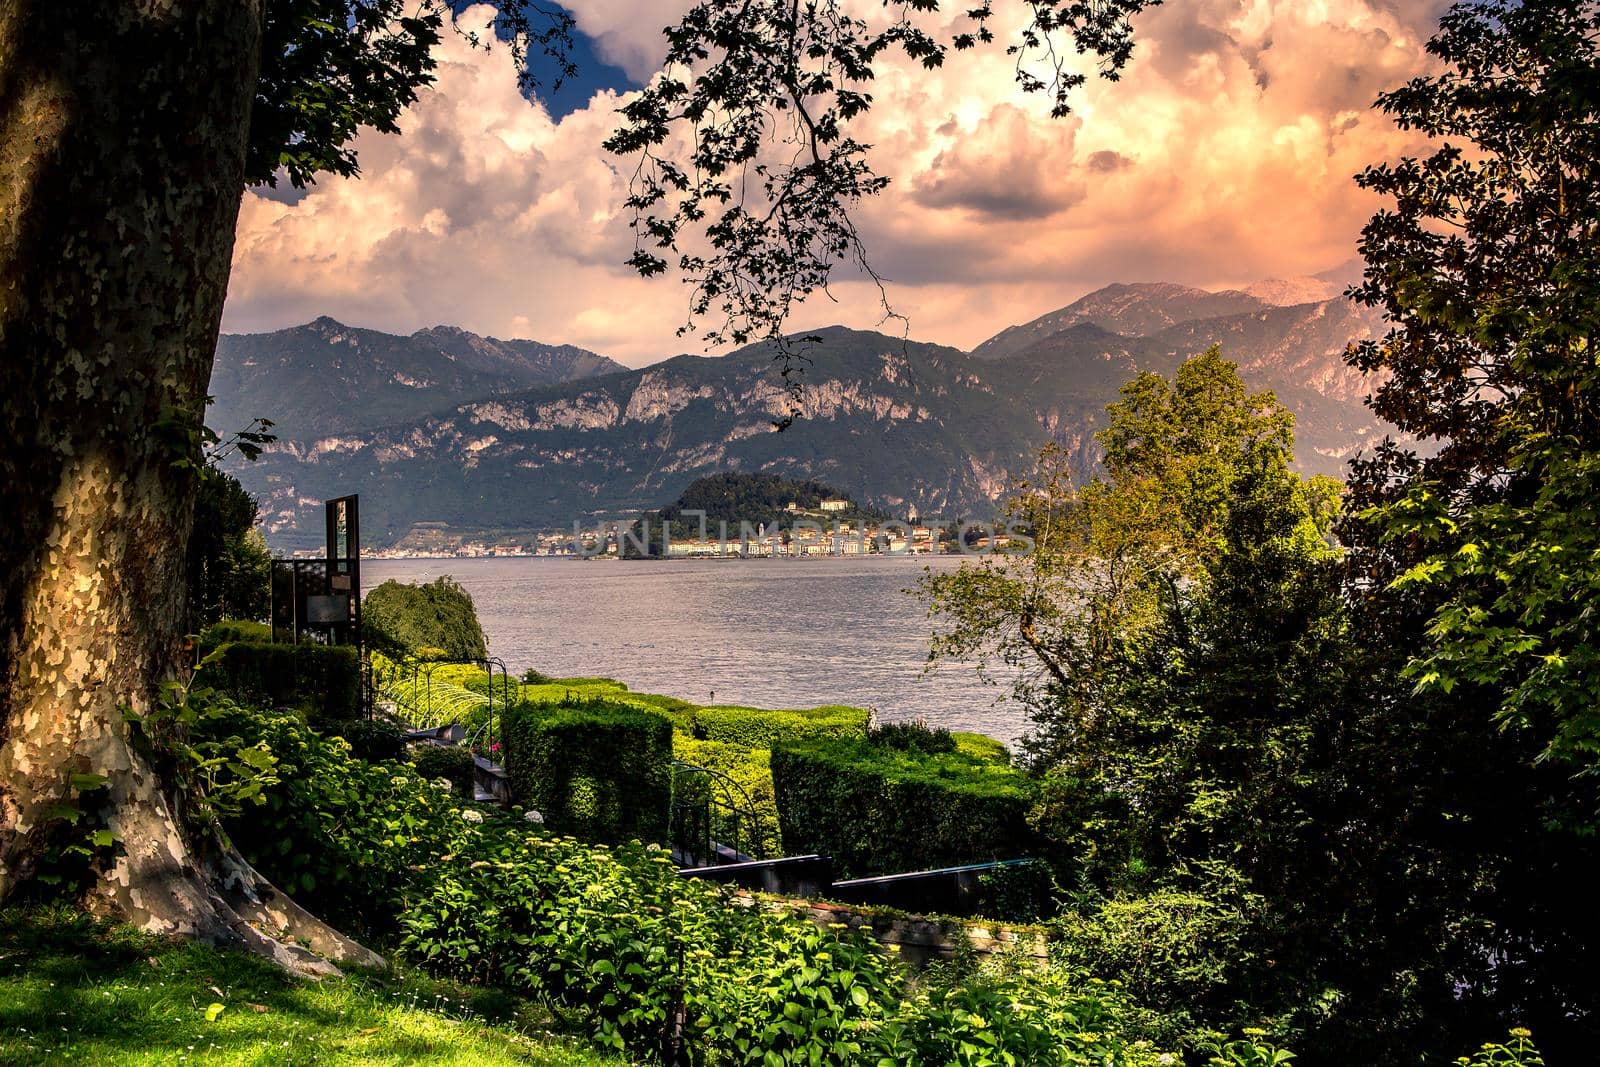  lake Como, near Bellagio, piedmonte, italy by photogolfer